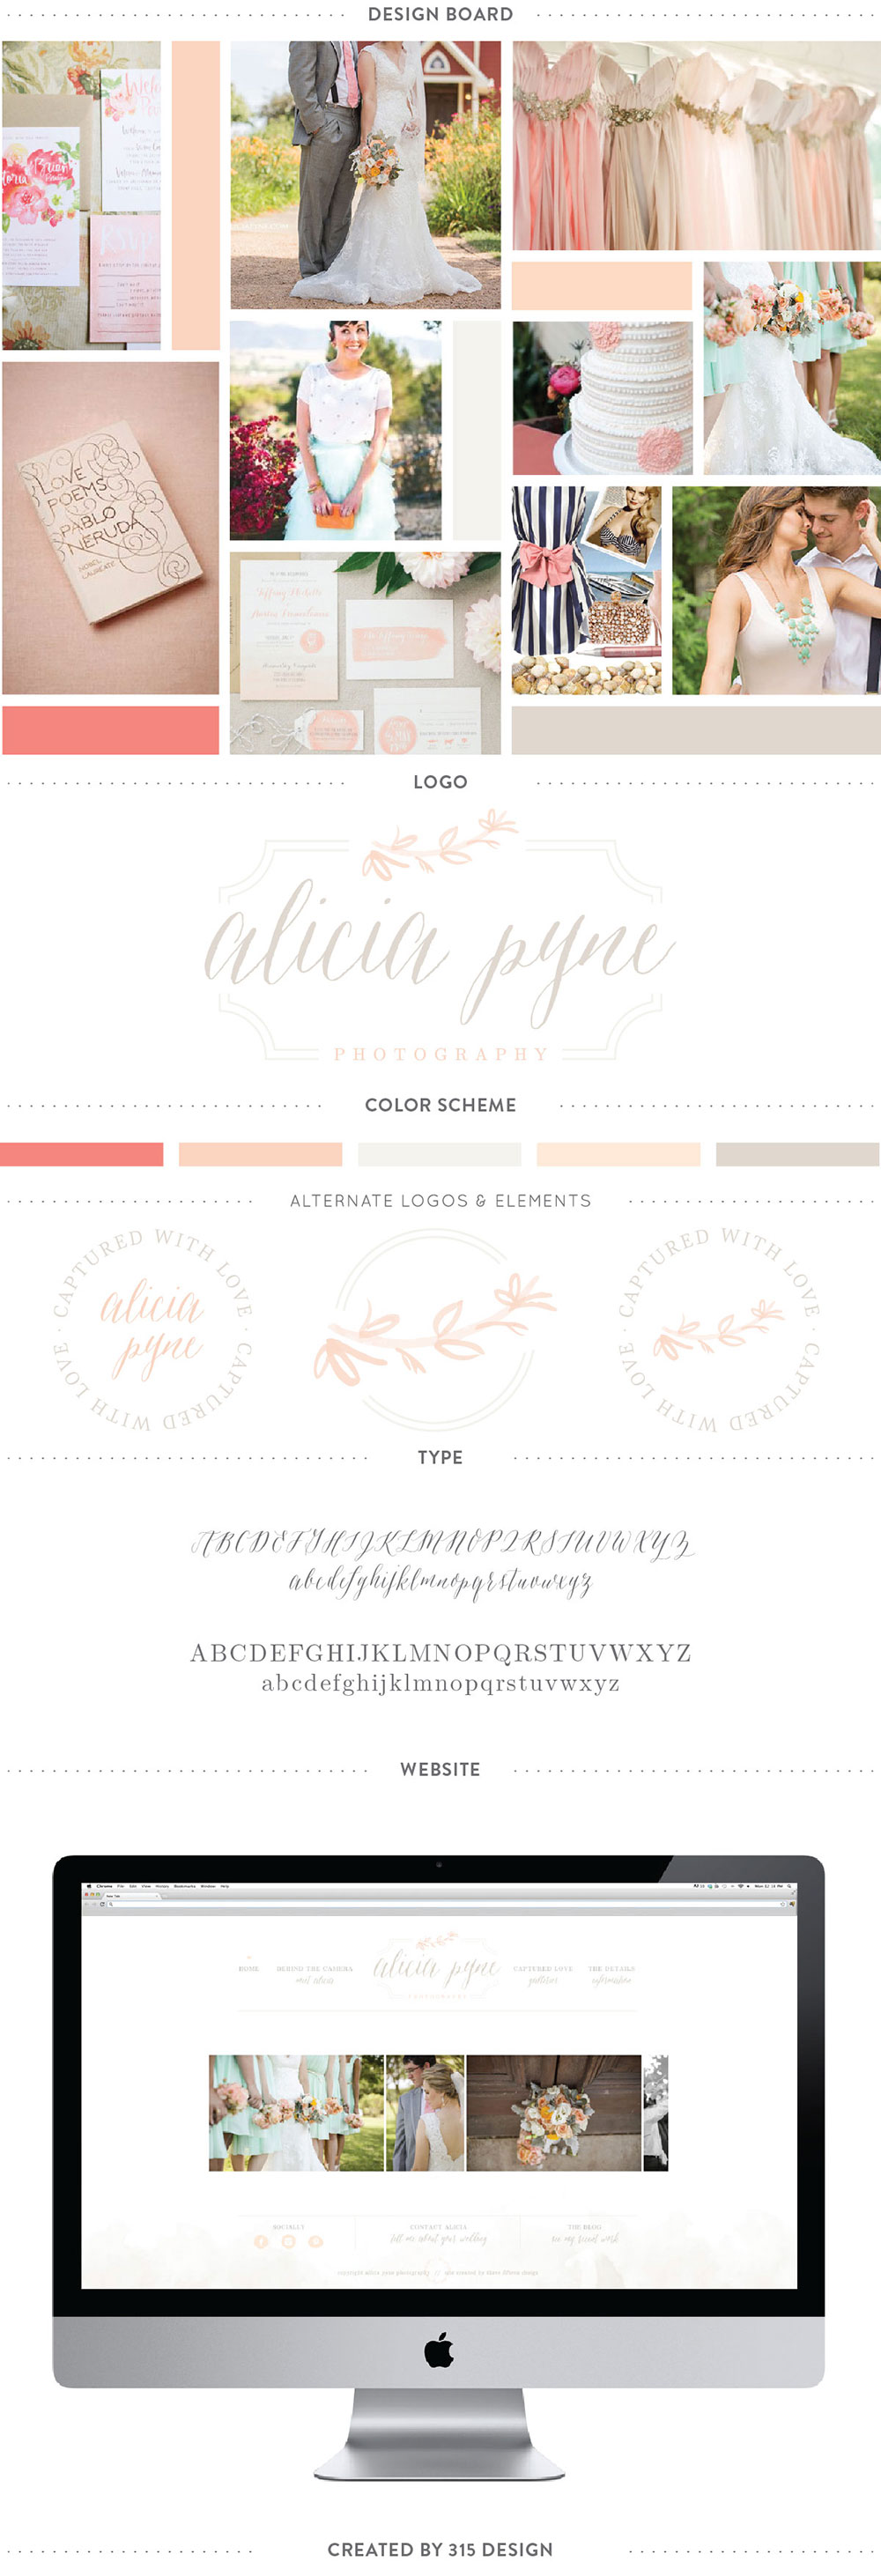 Alicia-Pyne-Logo-by-315-Design